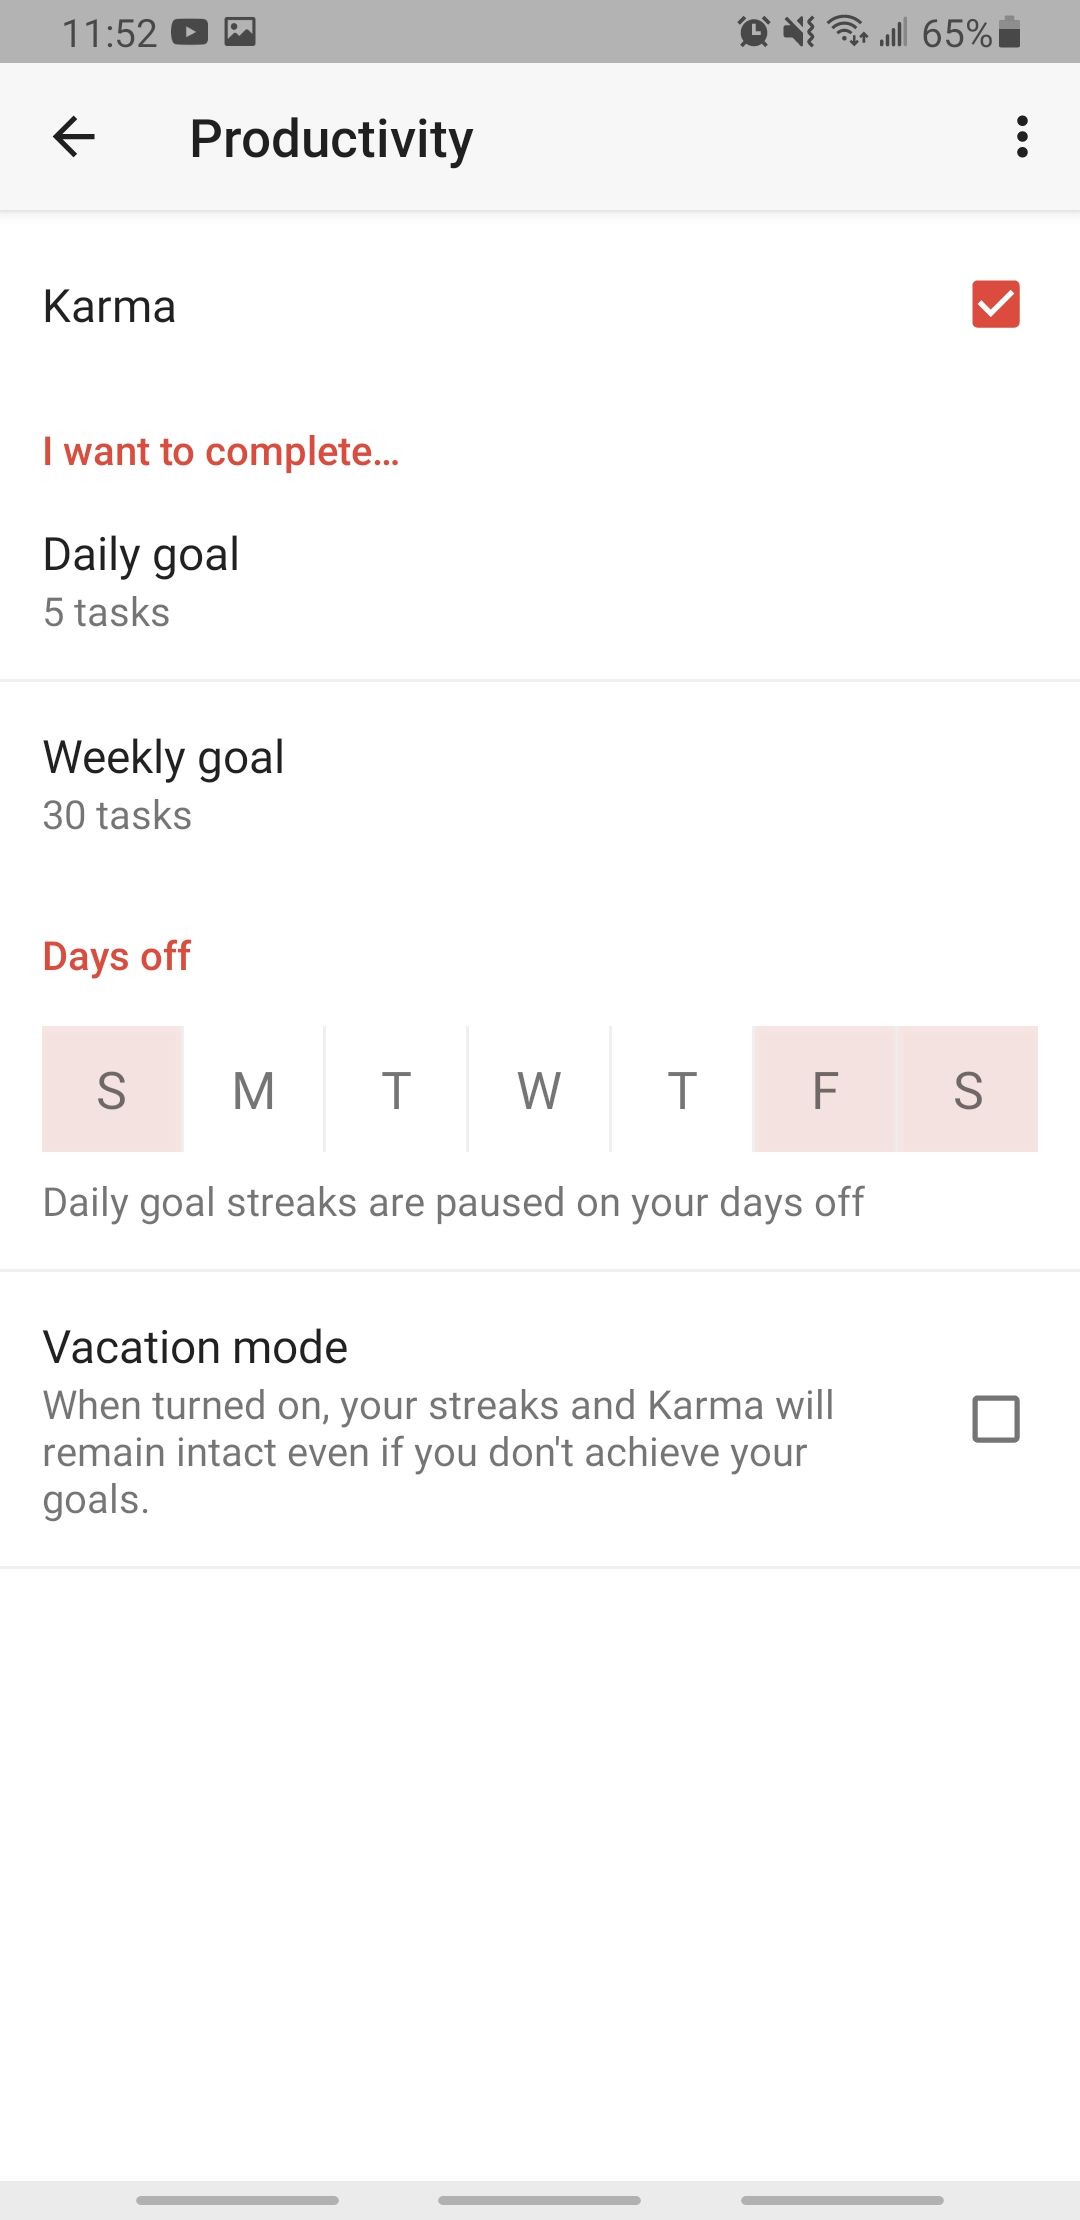 todoist app productivity goals tracker